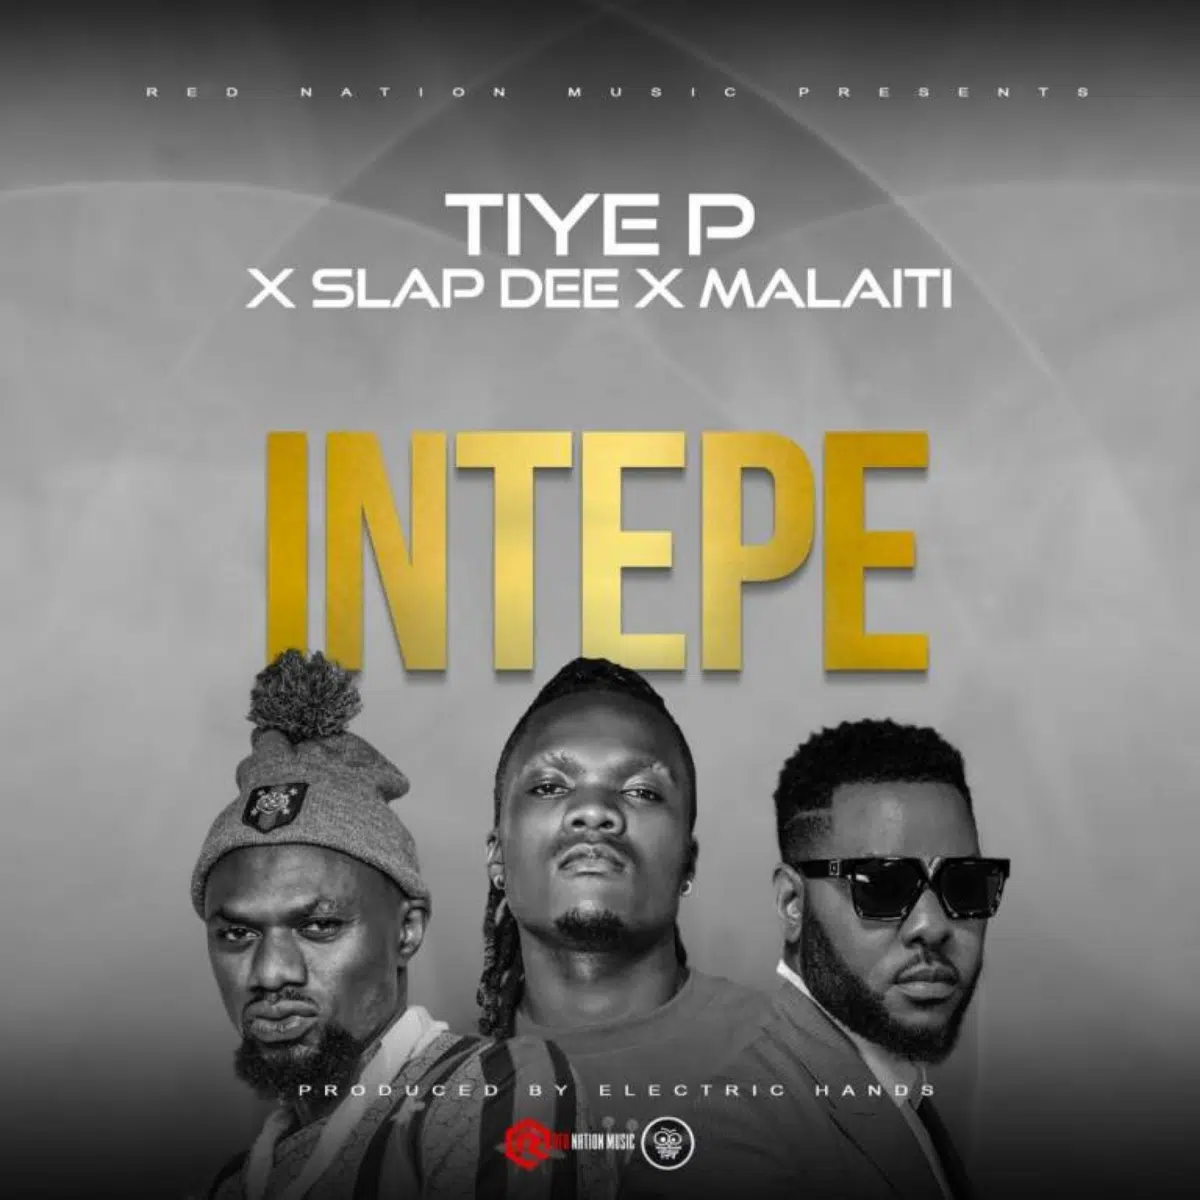 DOWNLOAD: Tiye P Ft Slap Dee & Malaiti – “Intepe” Mp3